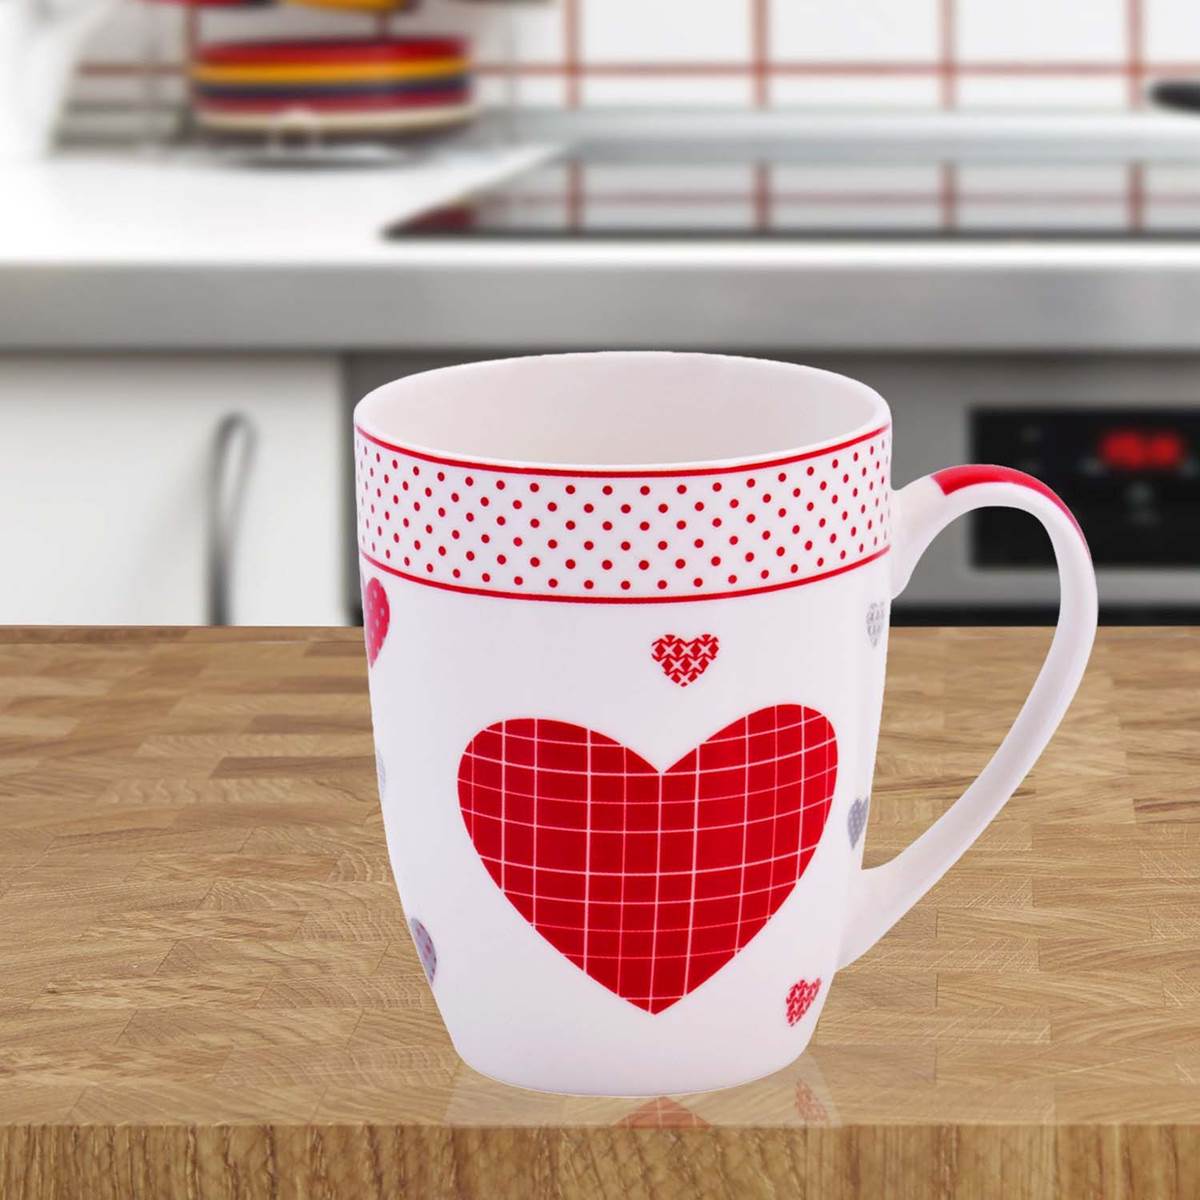 Printed Ceramic Coffee or Tea Mug with handle - 325ml (3788G-C)